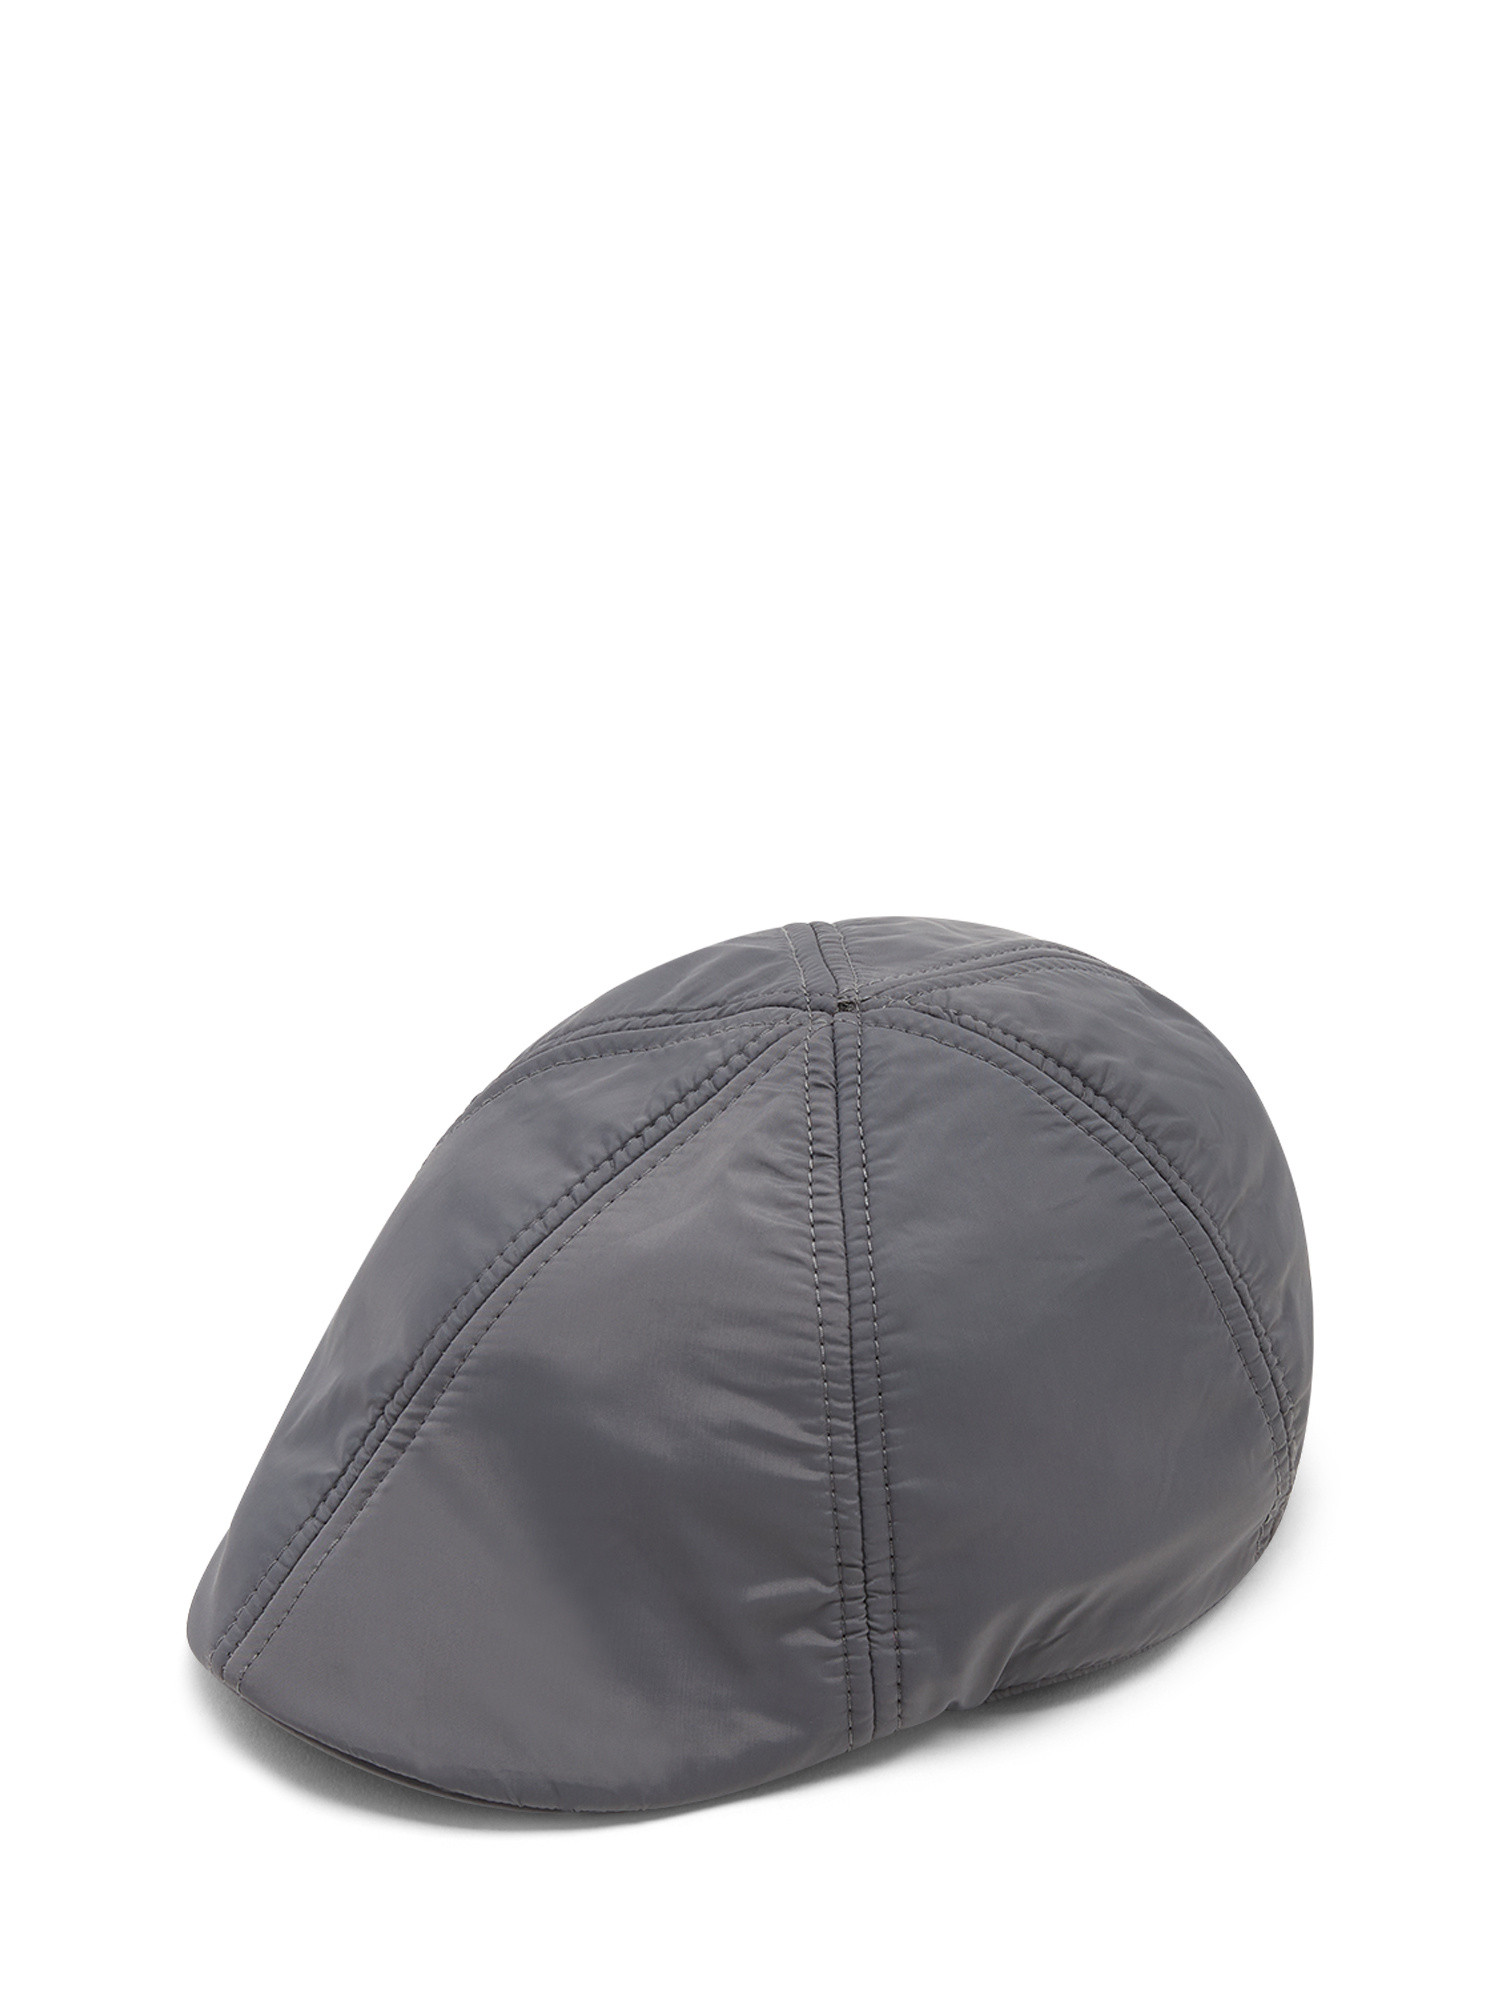 Luca D'Altieri - Nylon cap, Dark Grey, large image number 0